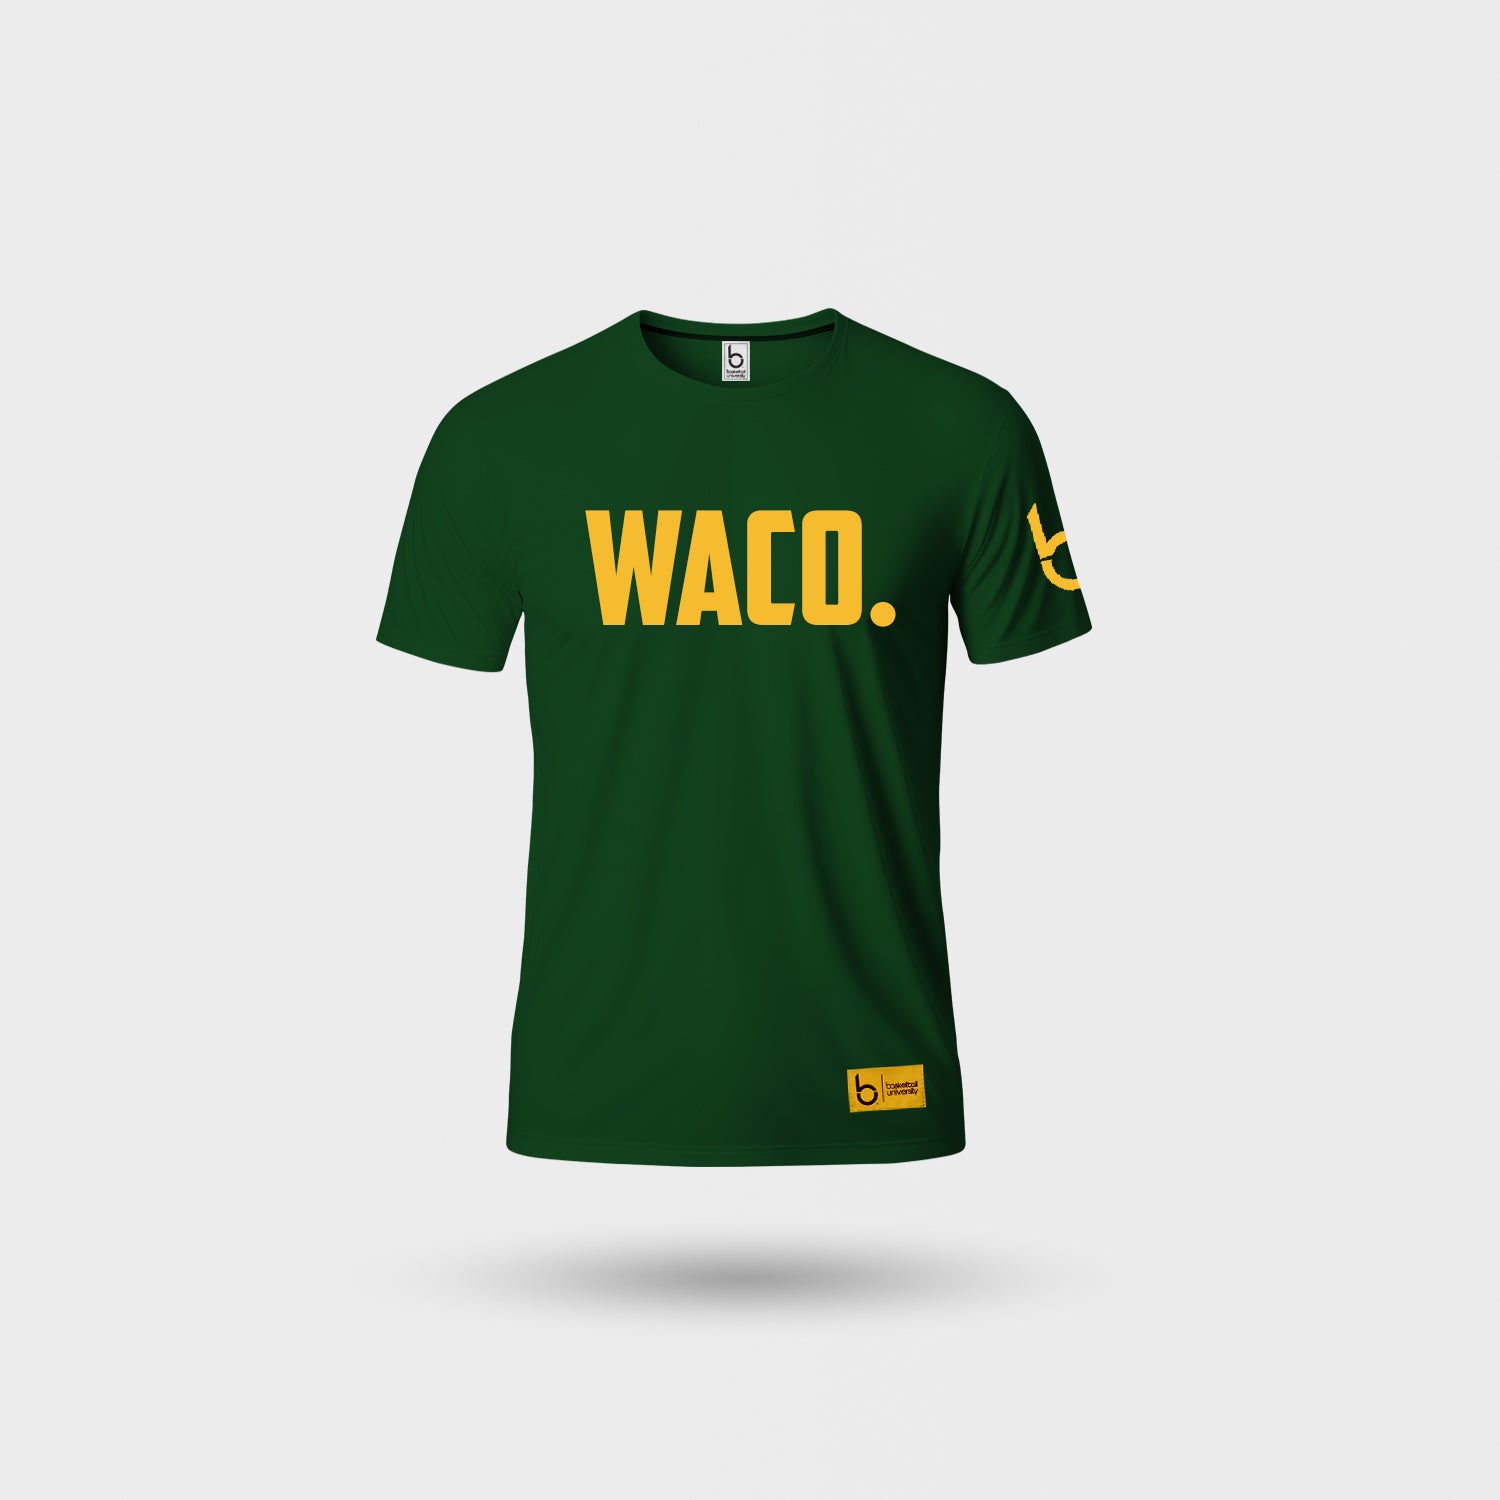 Waco - Hoop City T-Shirt